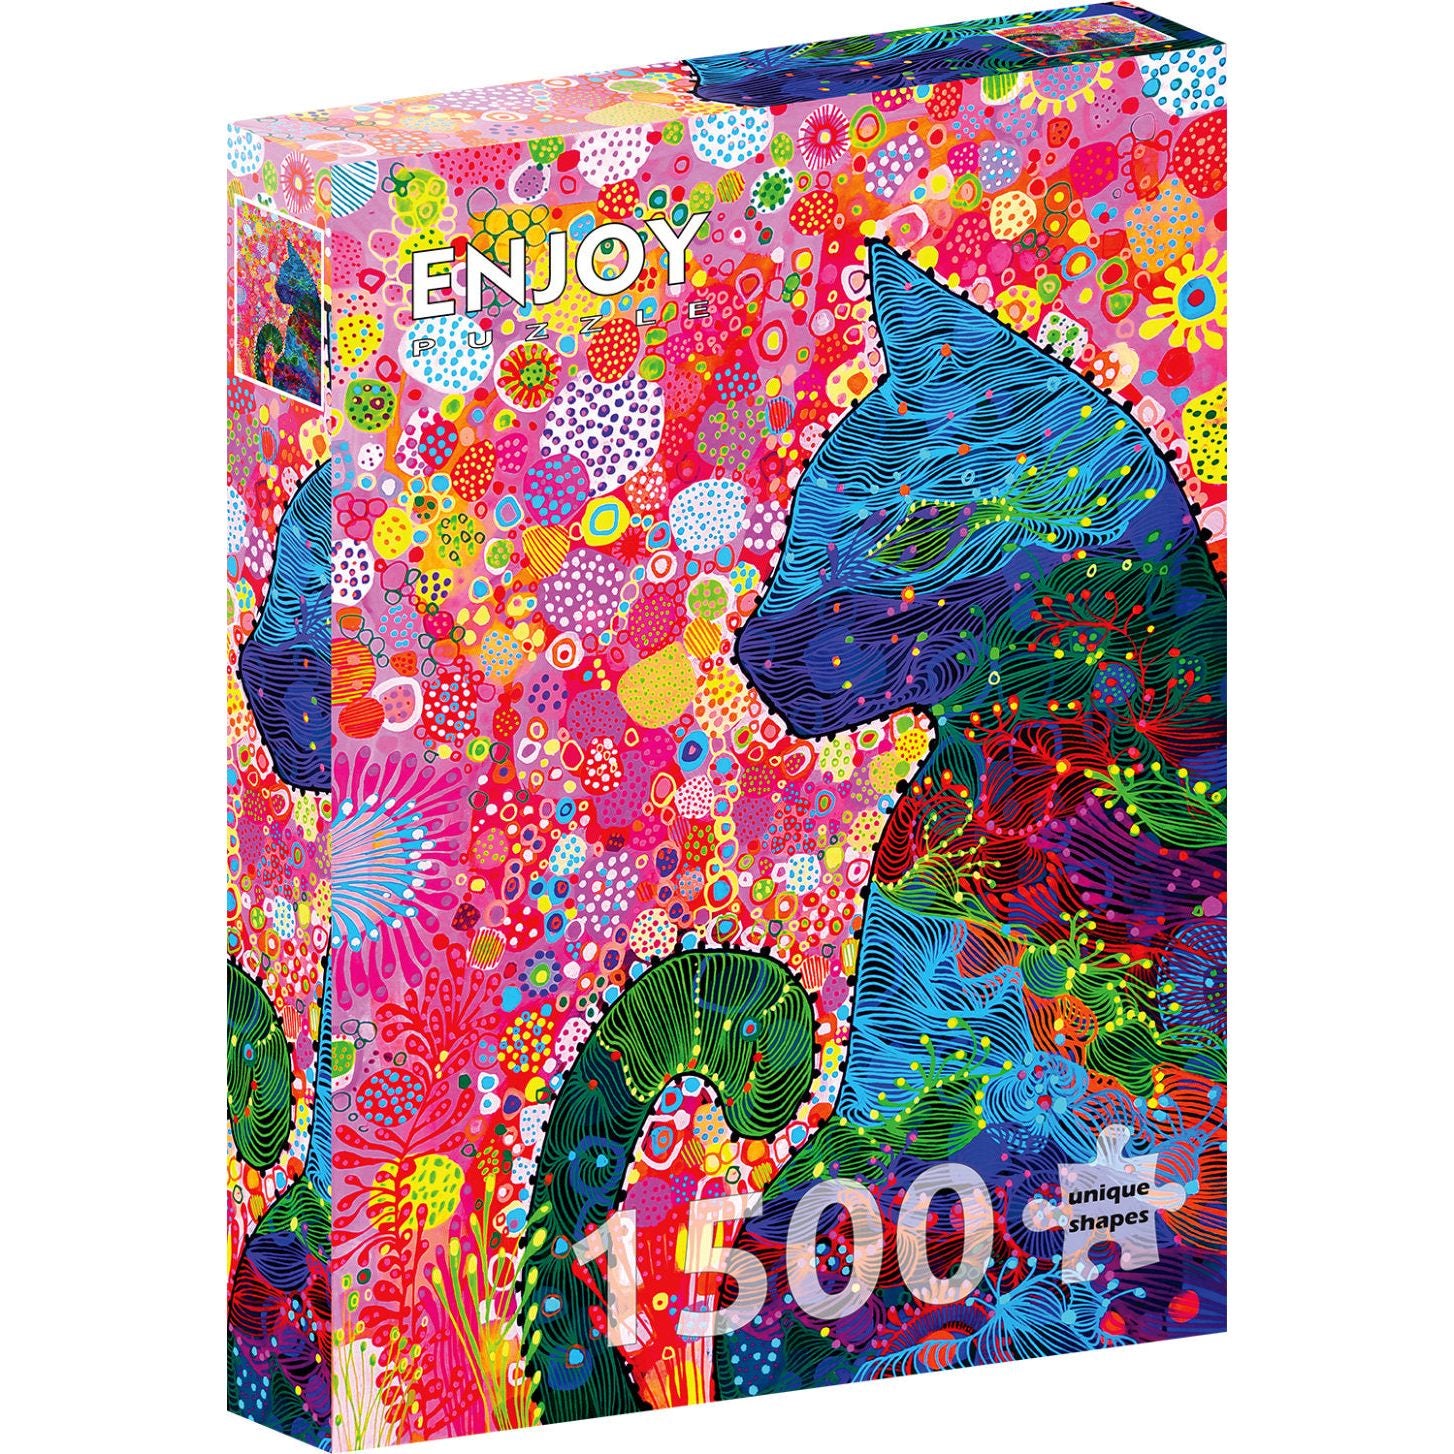 ENJOY Puzzle | 1500 Teile | Wandernde Katze